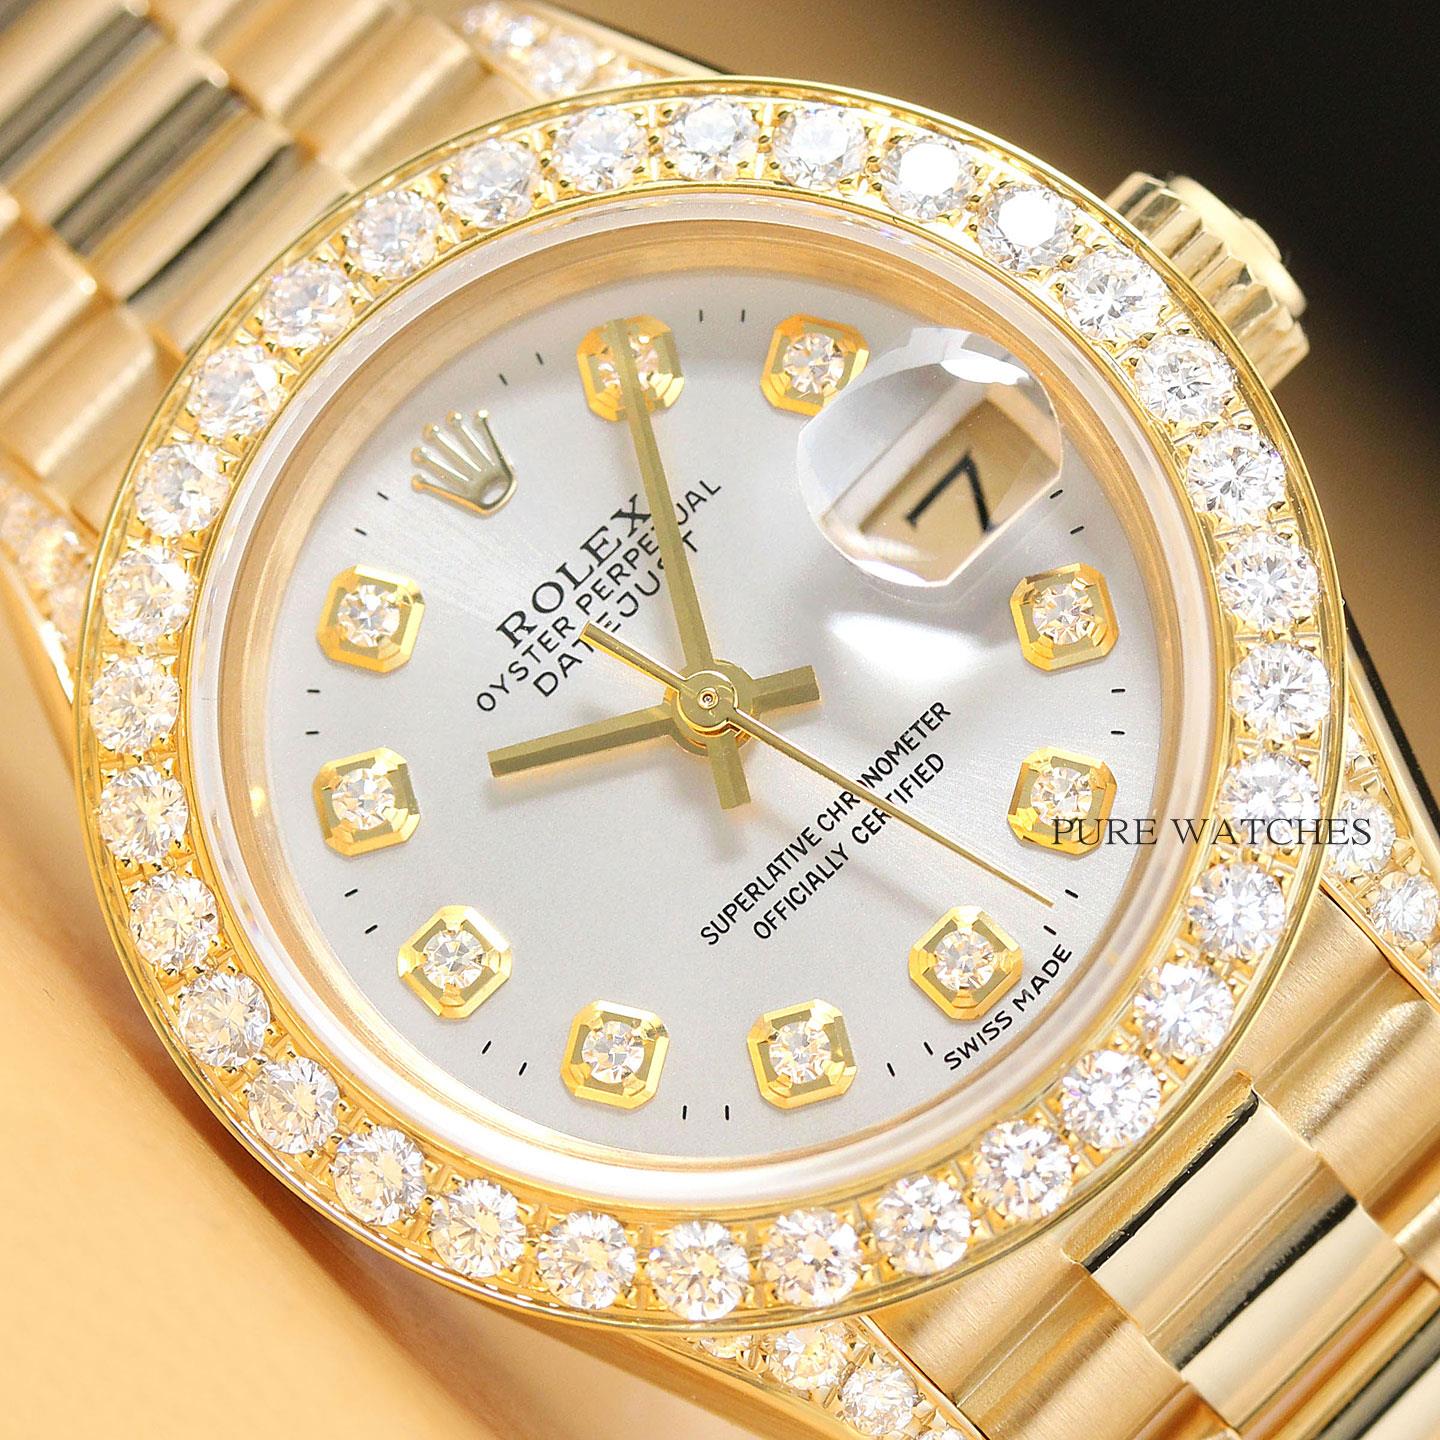 Sale > gold rolex diamond watch > is stock